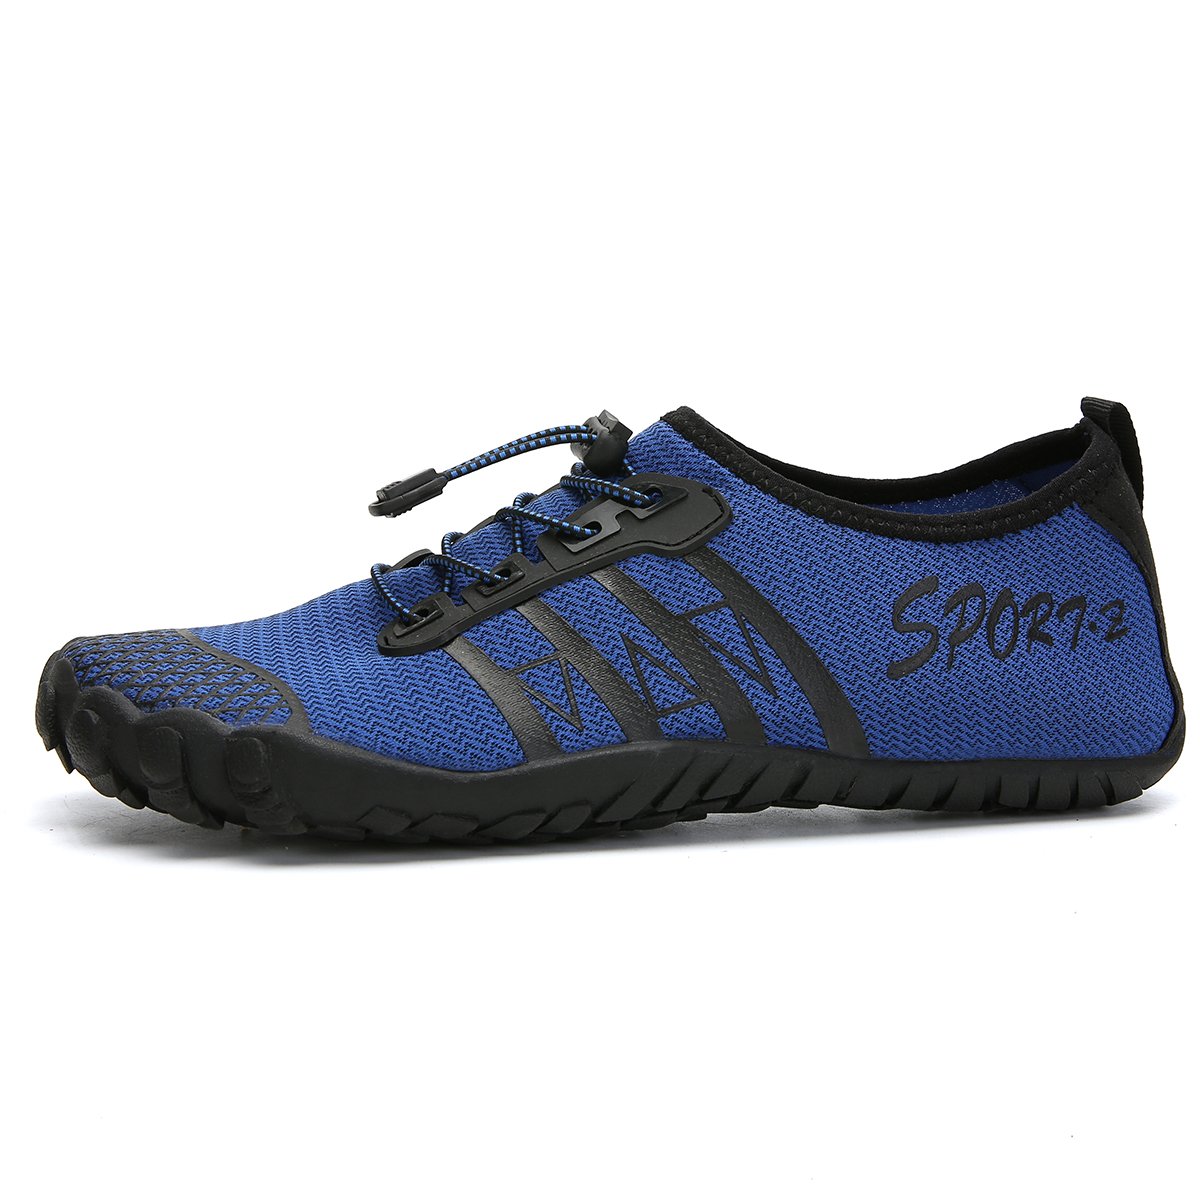 Men's Footwear Climbing Trekking Sneakers Non-slip Slip-on Beach Wading Shoes